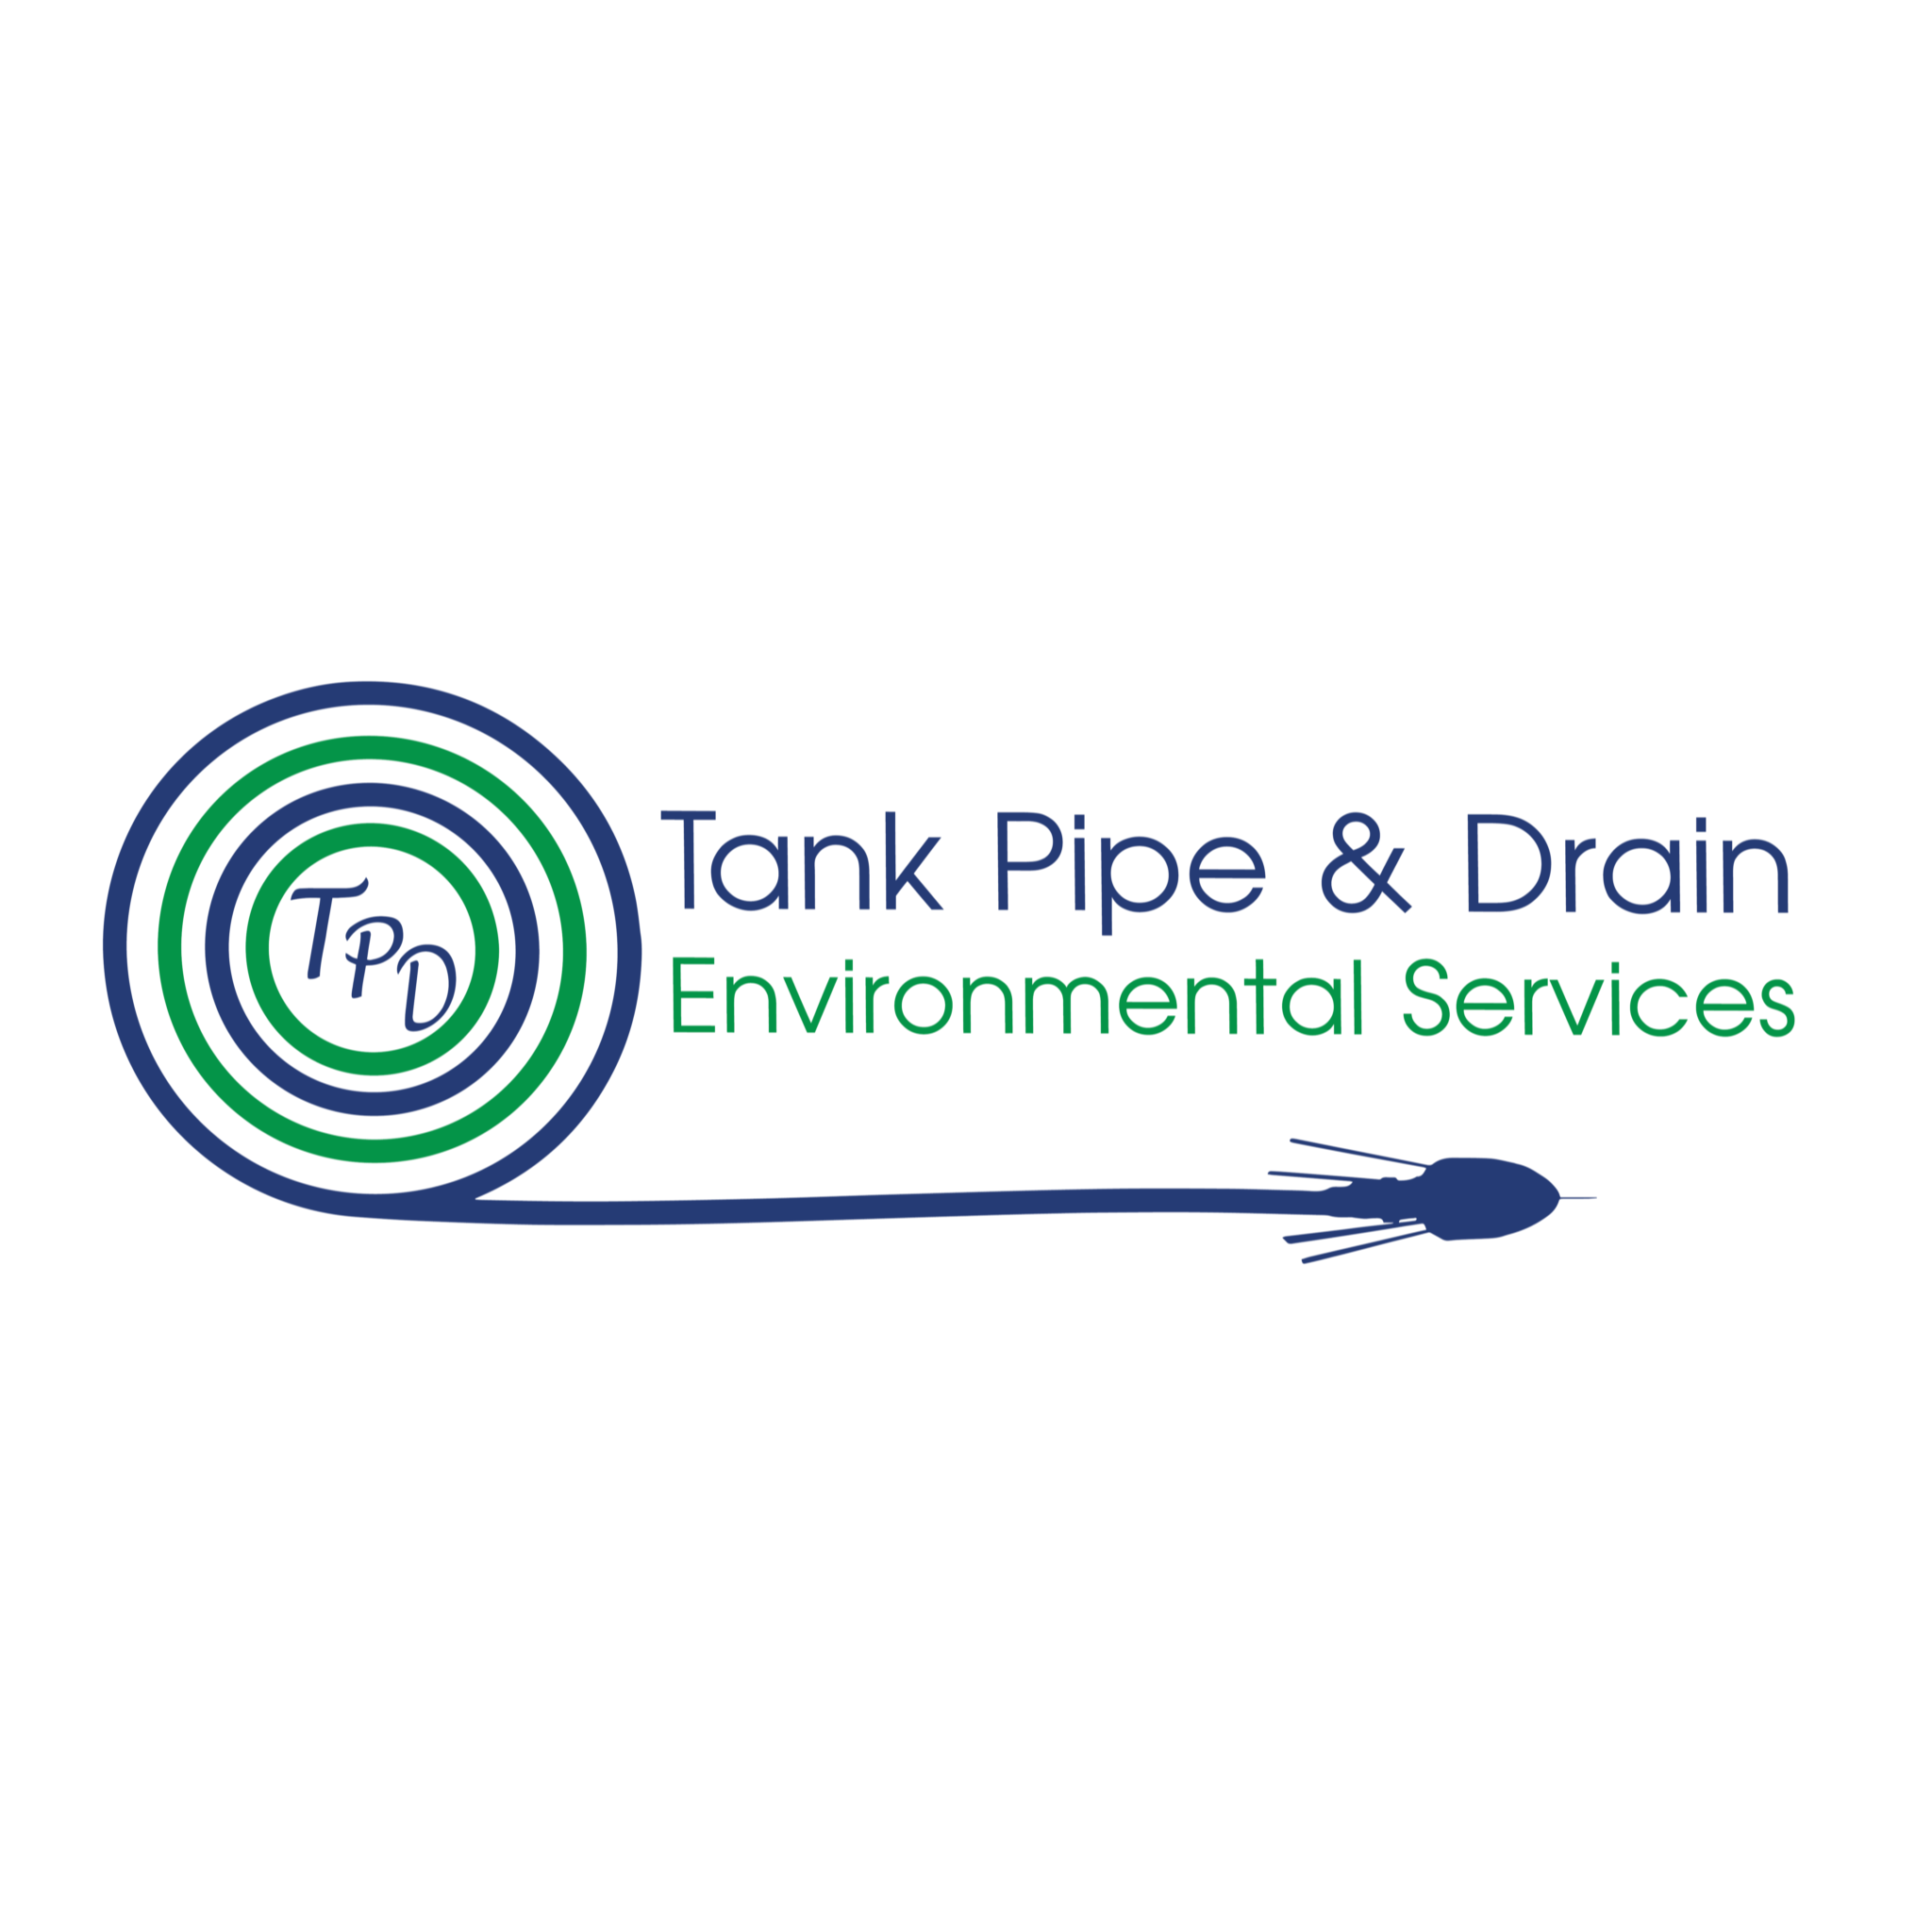 Tank Pipe & Drain Ltd